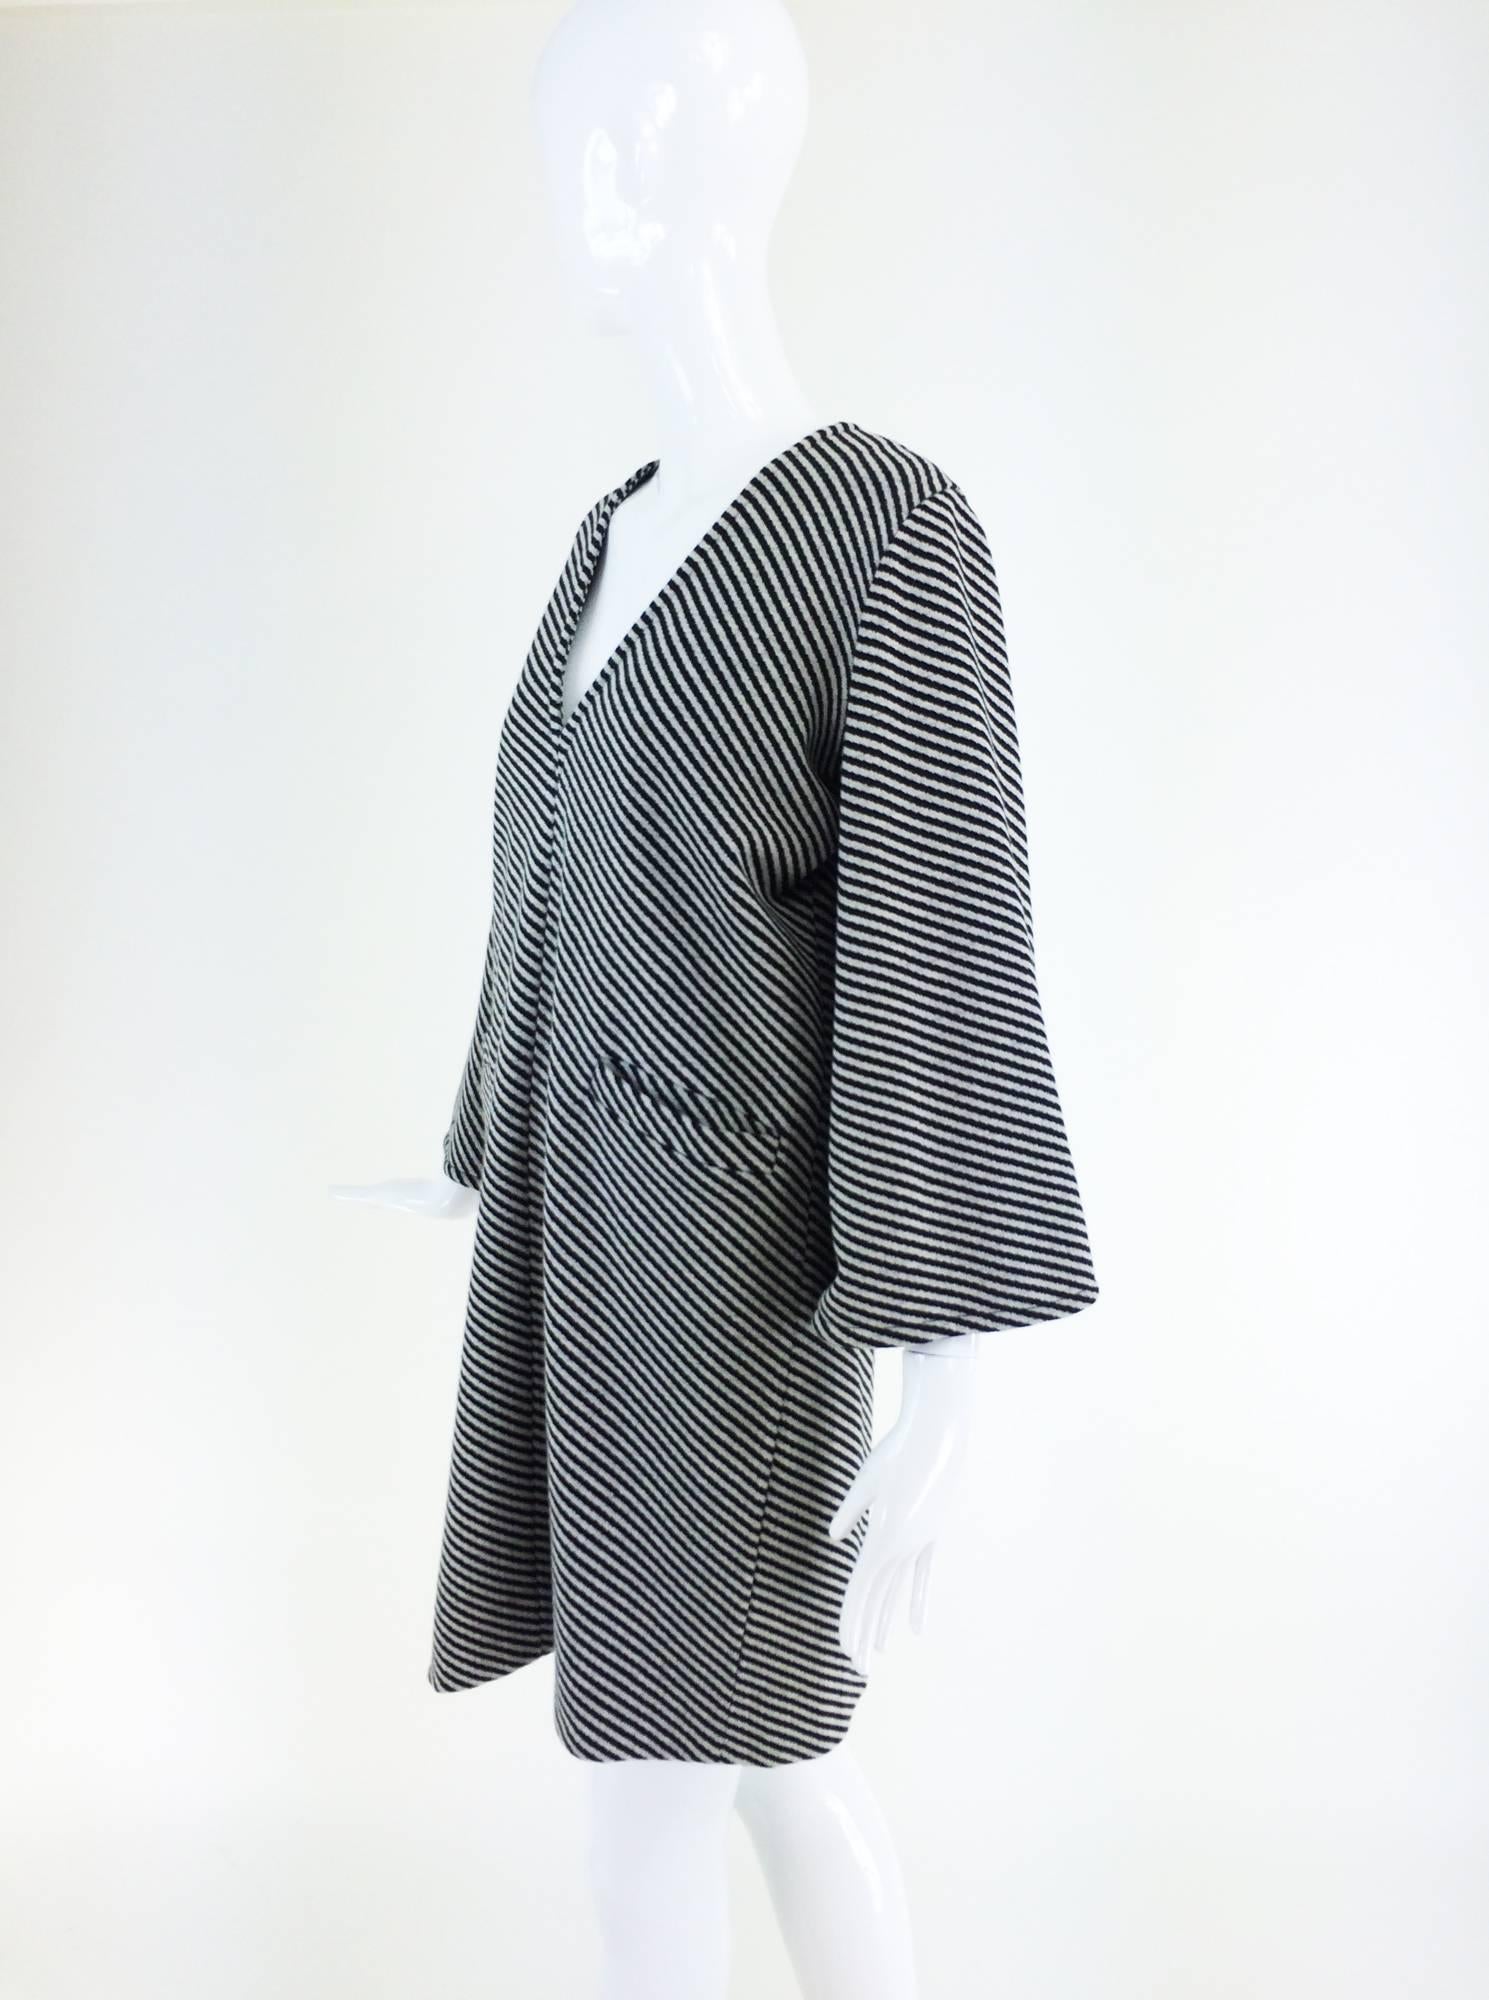 Black Rudi Gernreich Mod black & white bell sleeve dress 1960s